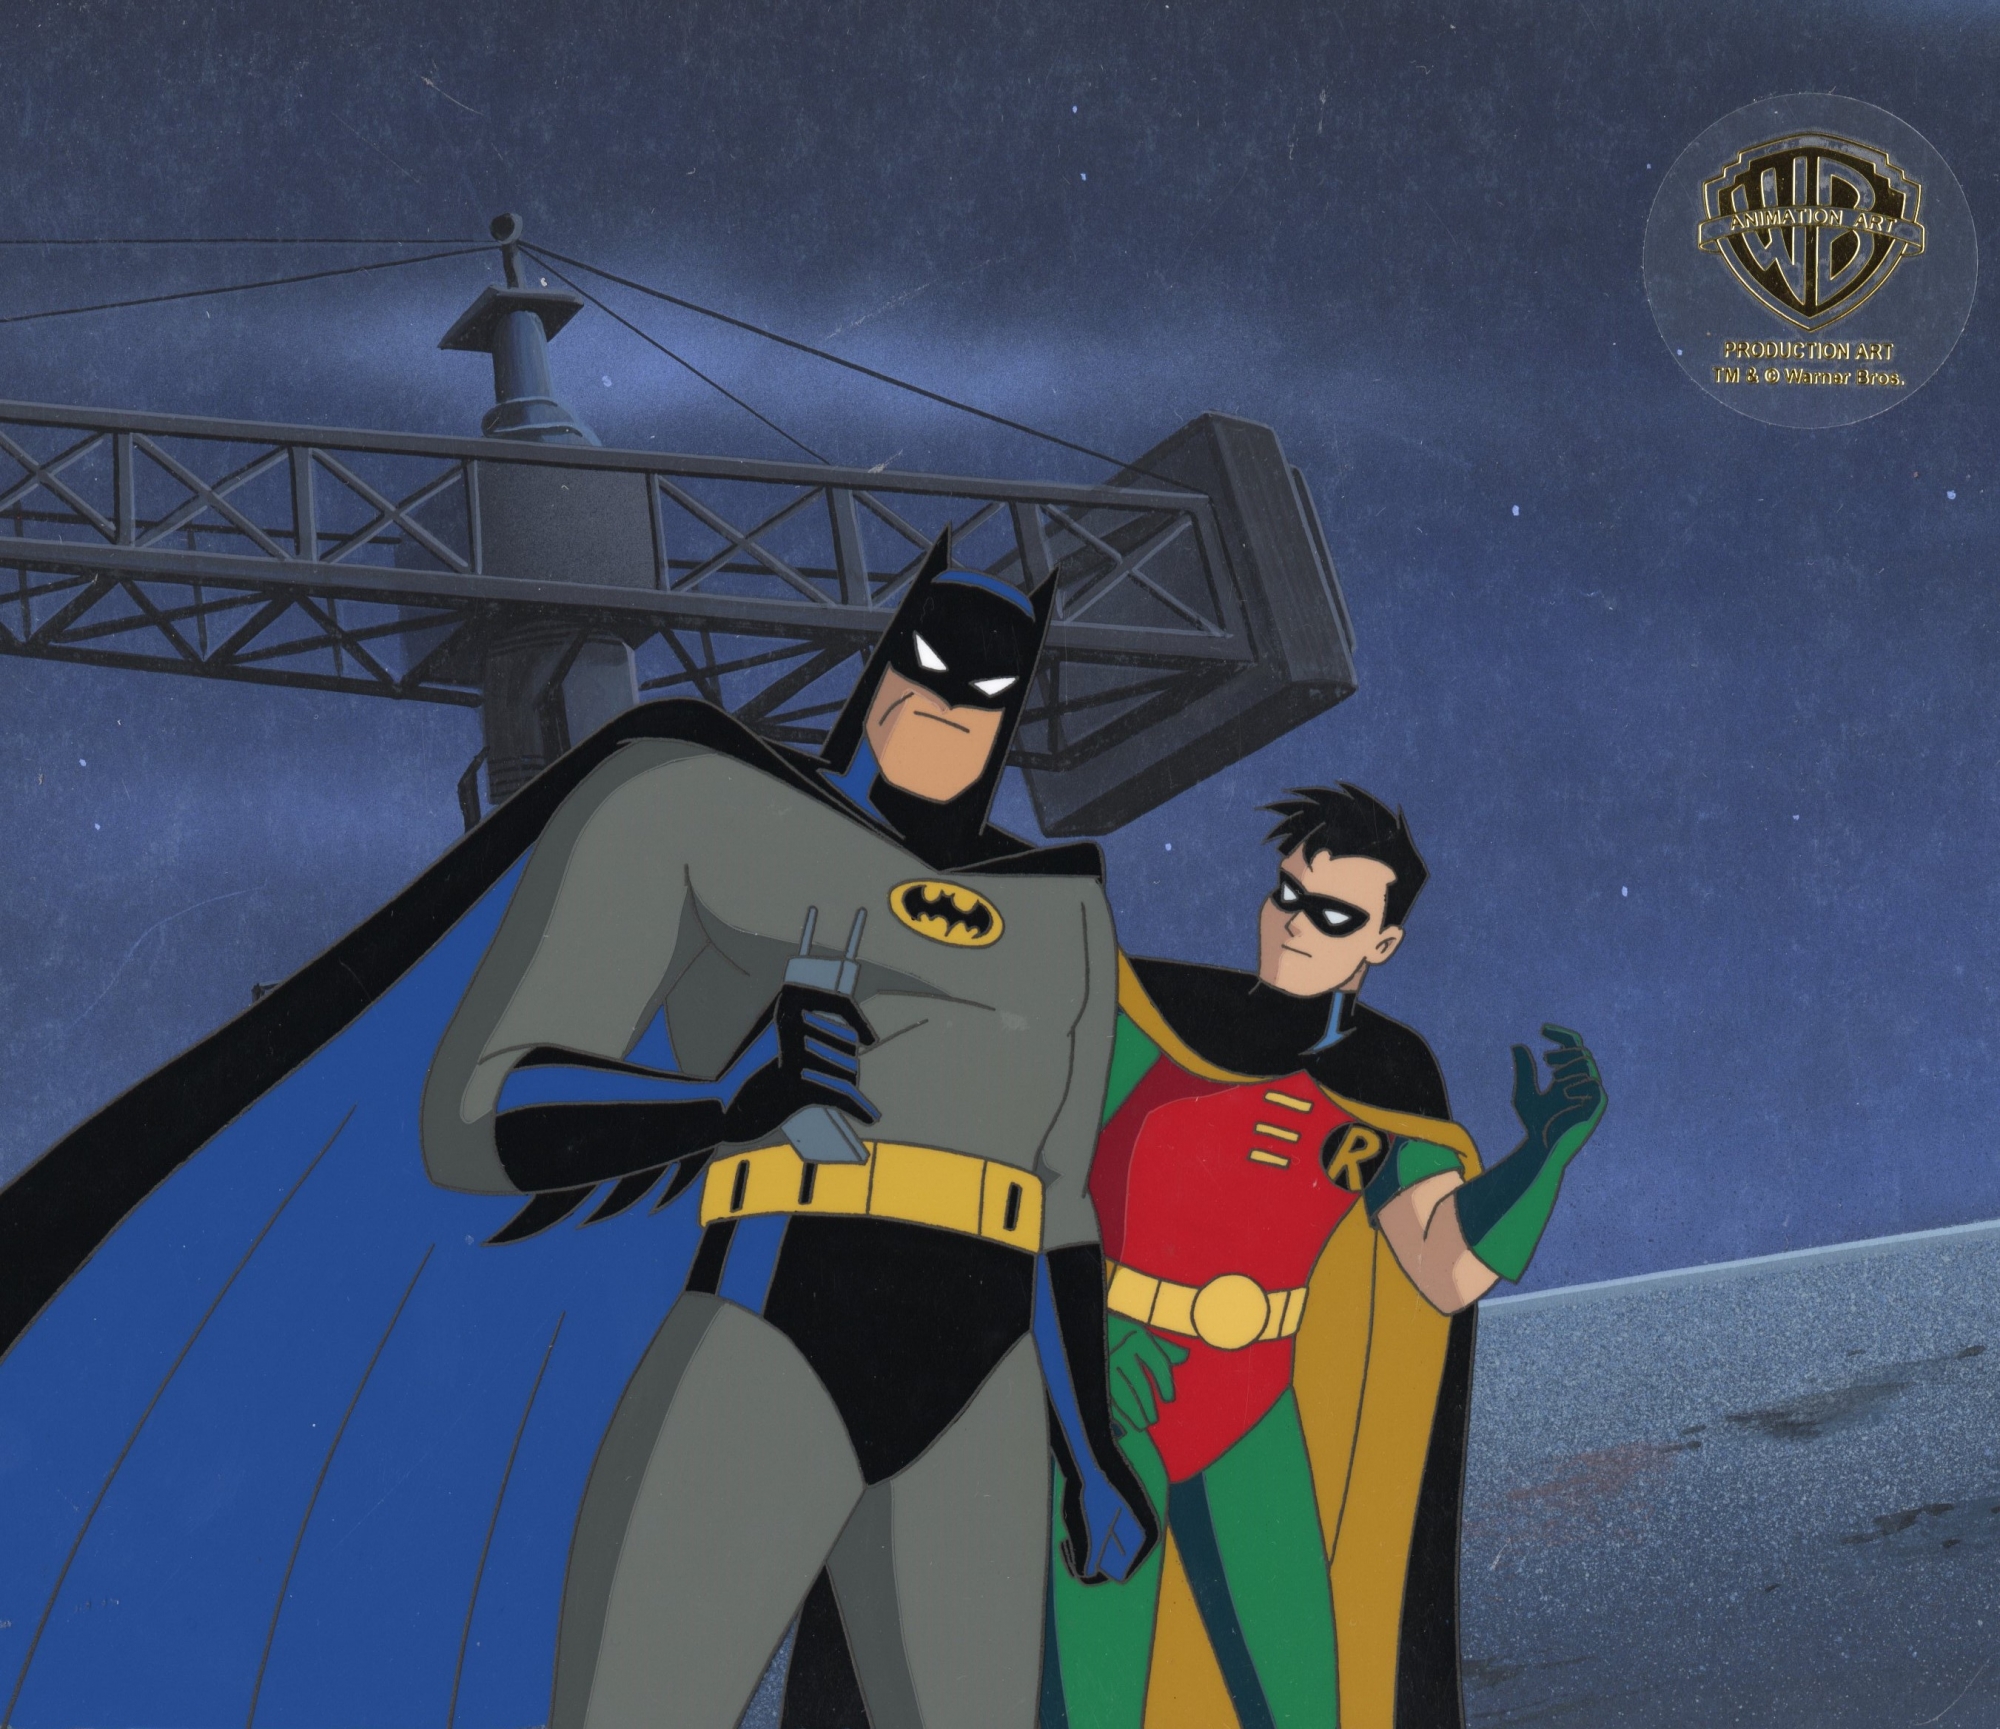 Batman & Robin - Production & Contact Info